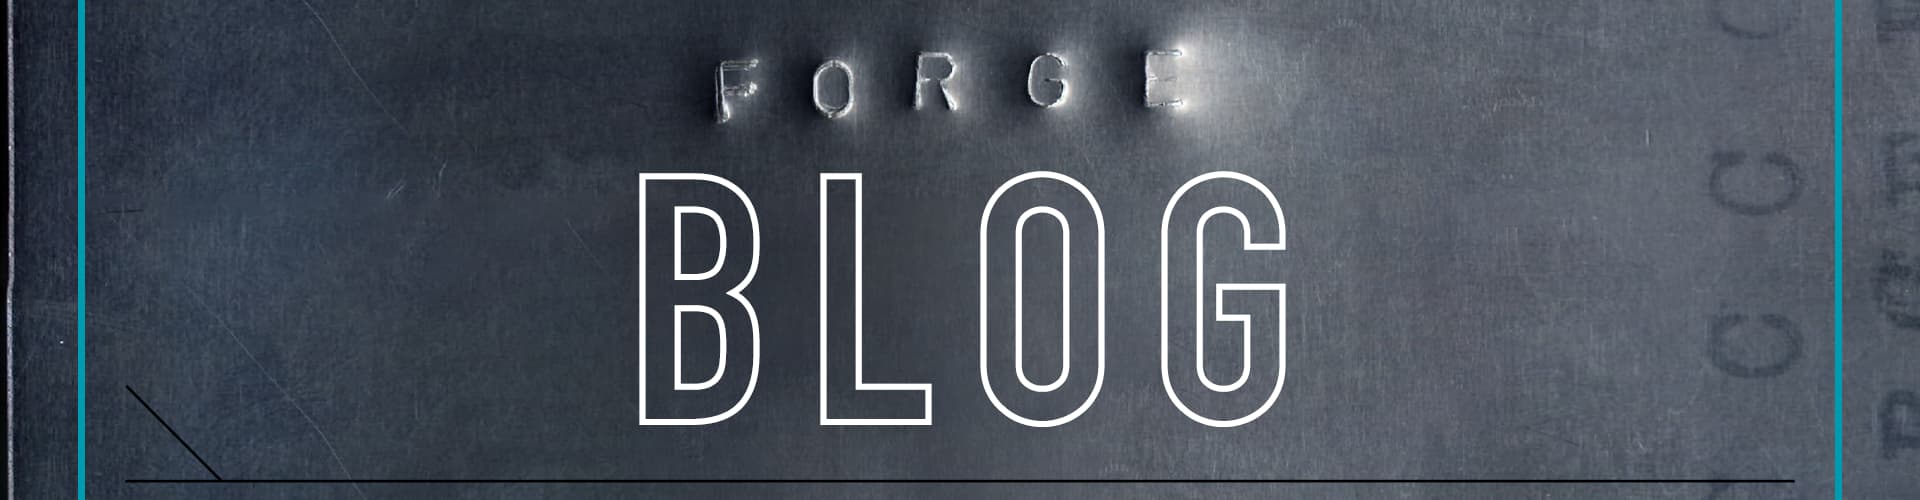 Forge - Blog